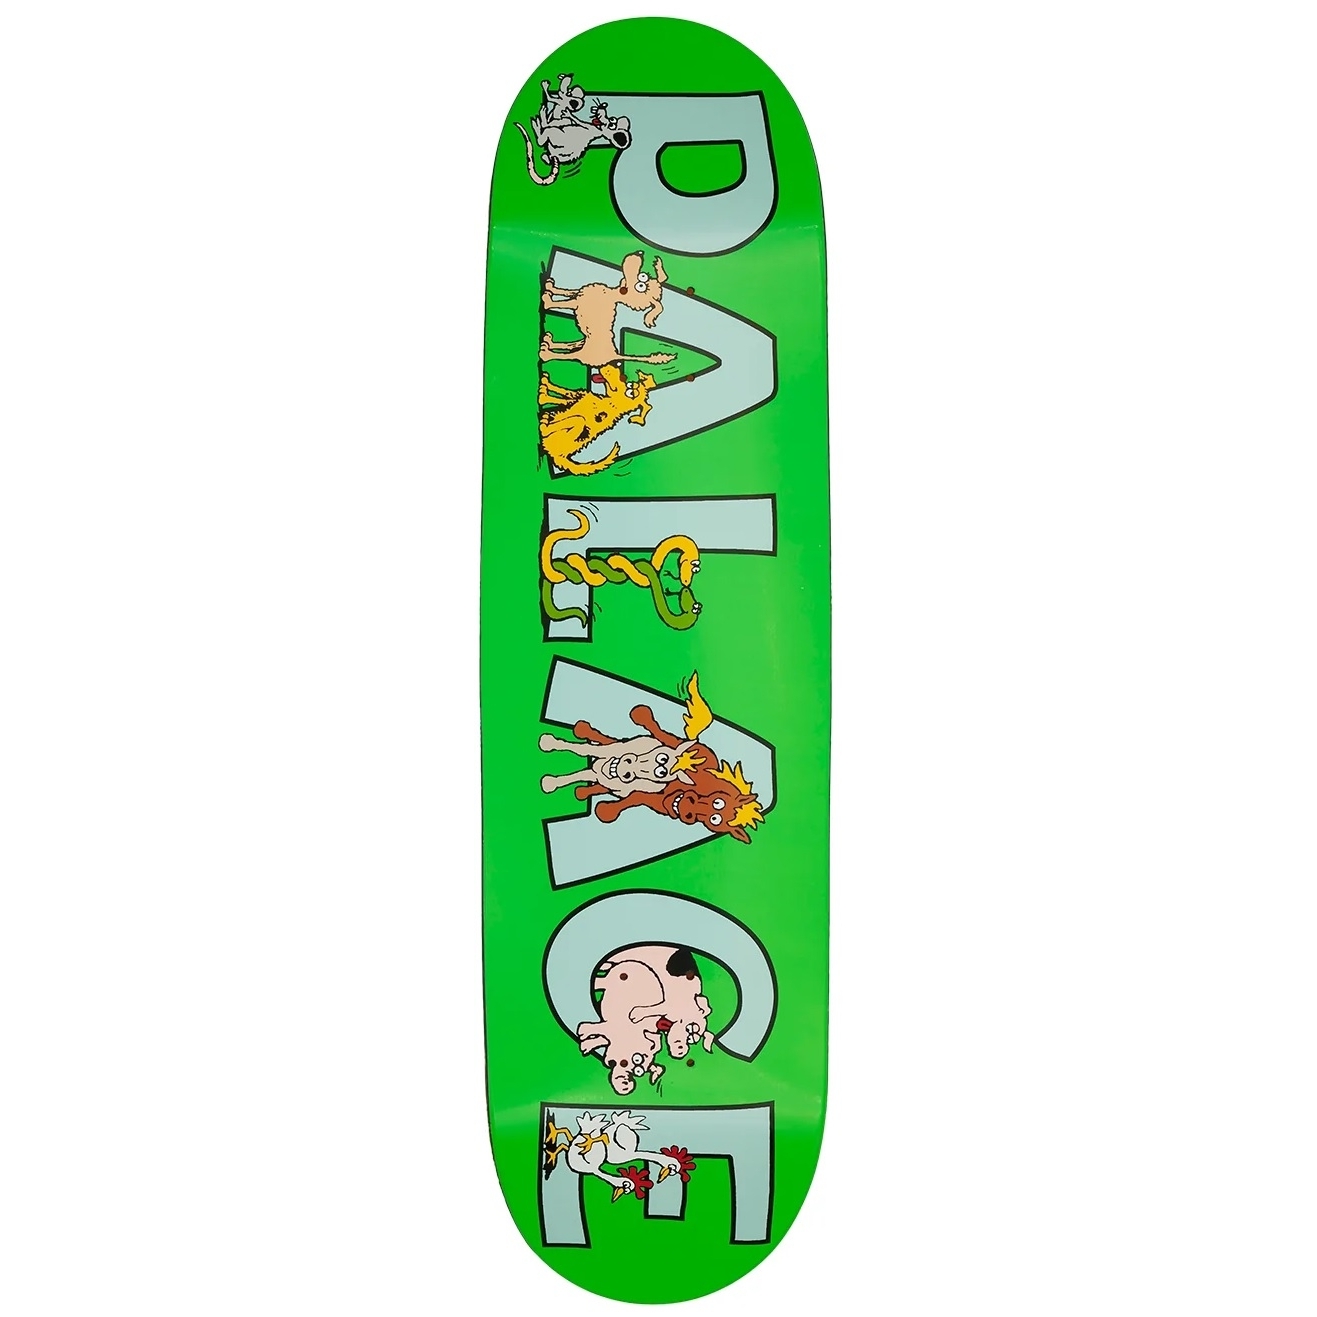 Details about   Palace Ich Bun Skateboard Deck Lot White & Green Palace Skateboards Brand New 